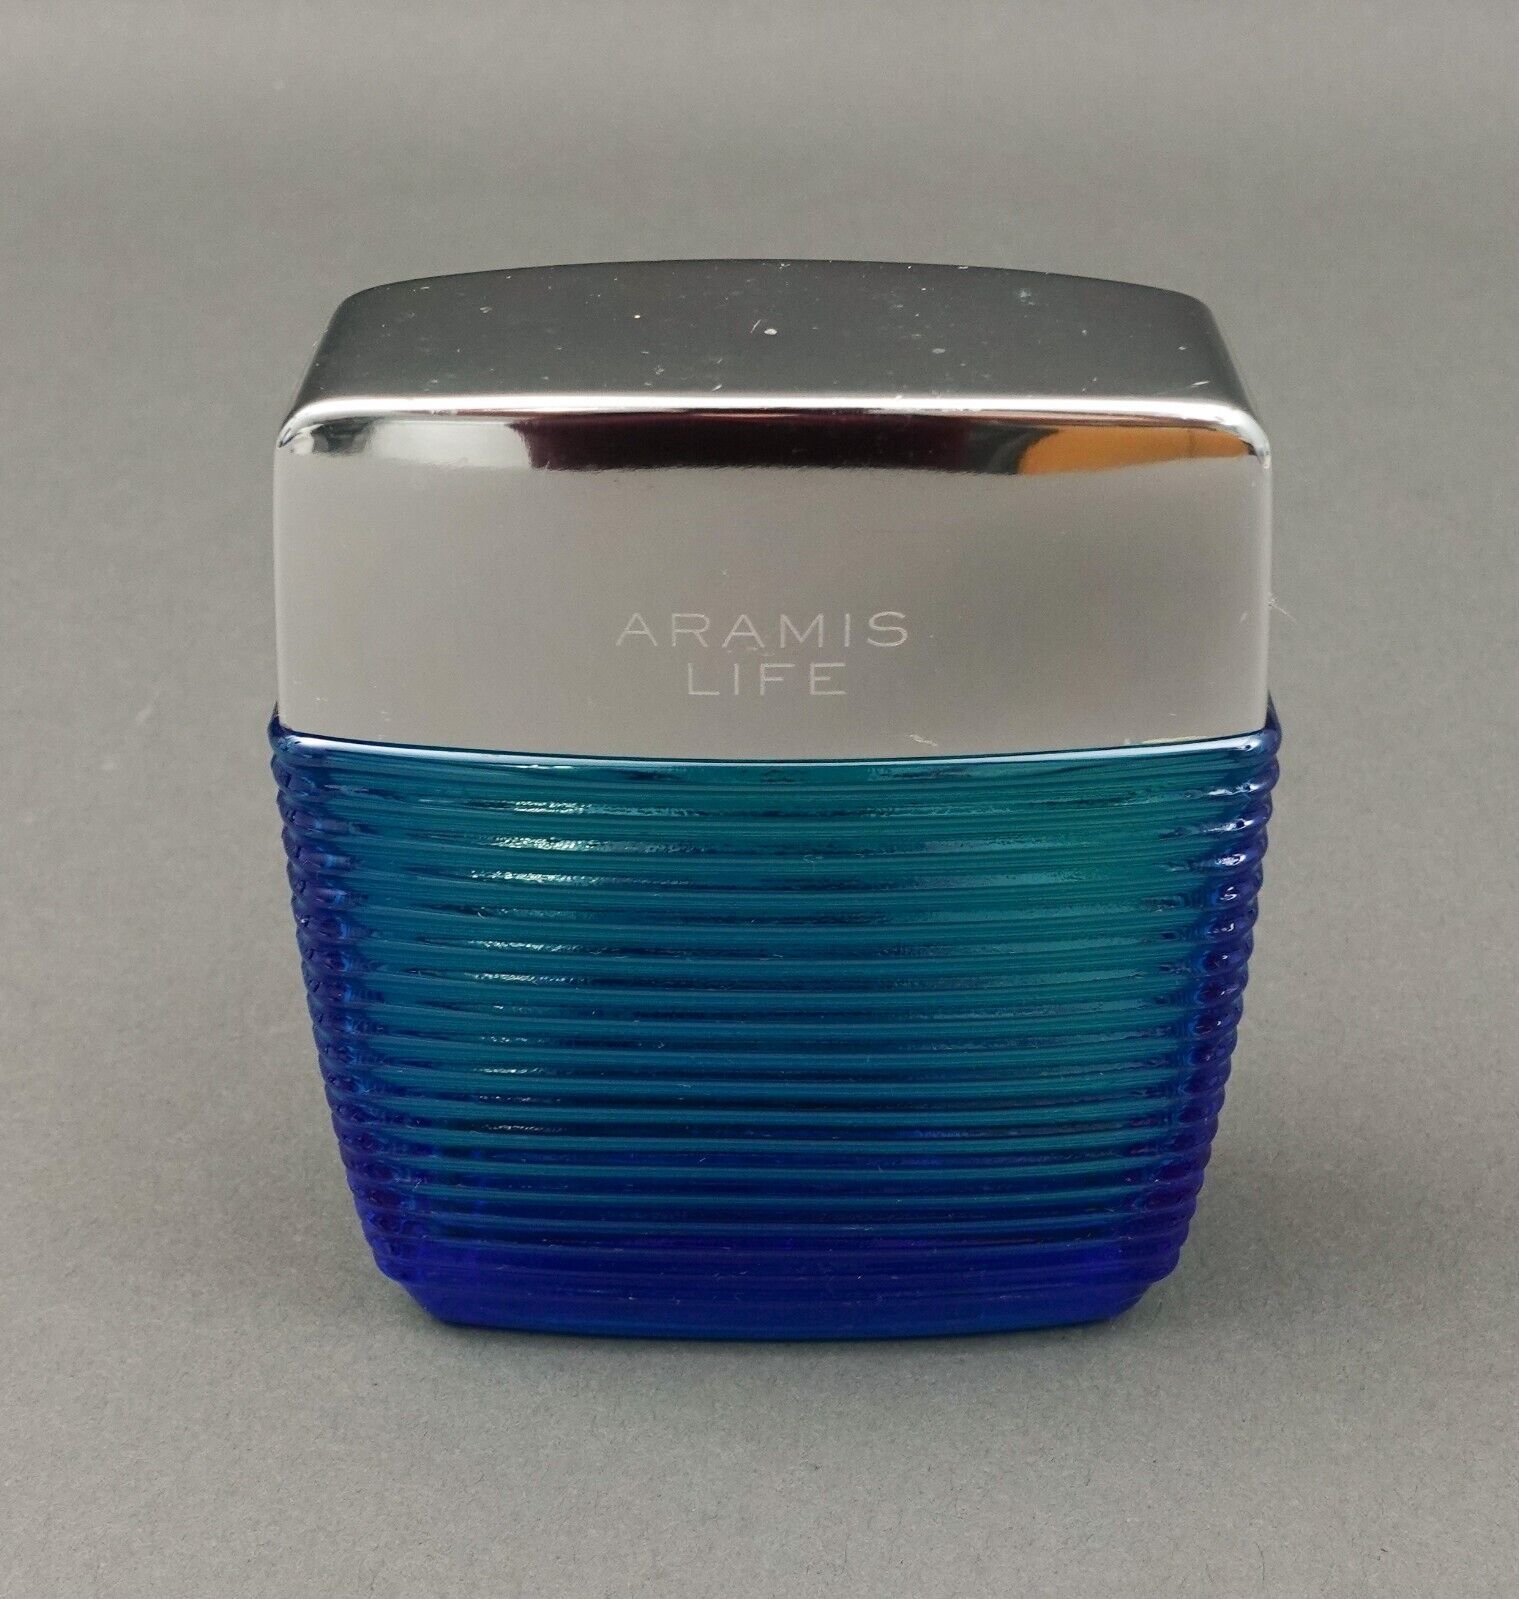 Aramis Life By Aramis After Shave Splash For Men 3.4 oz / 100 ml - $99.99